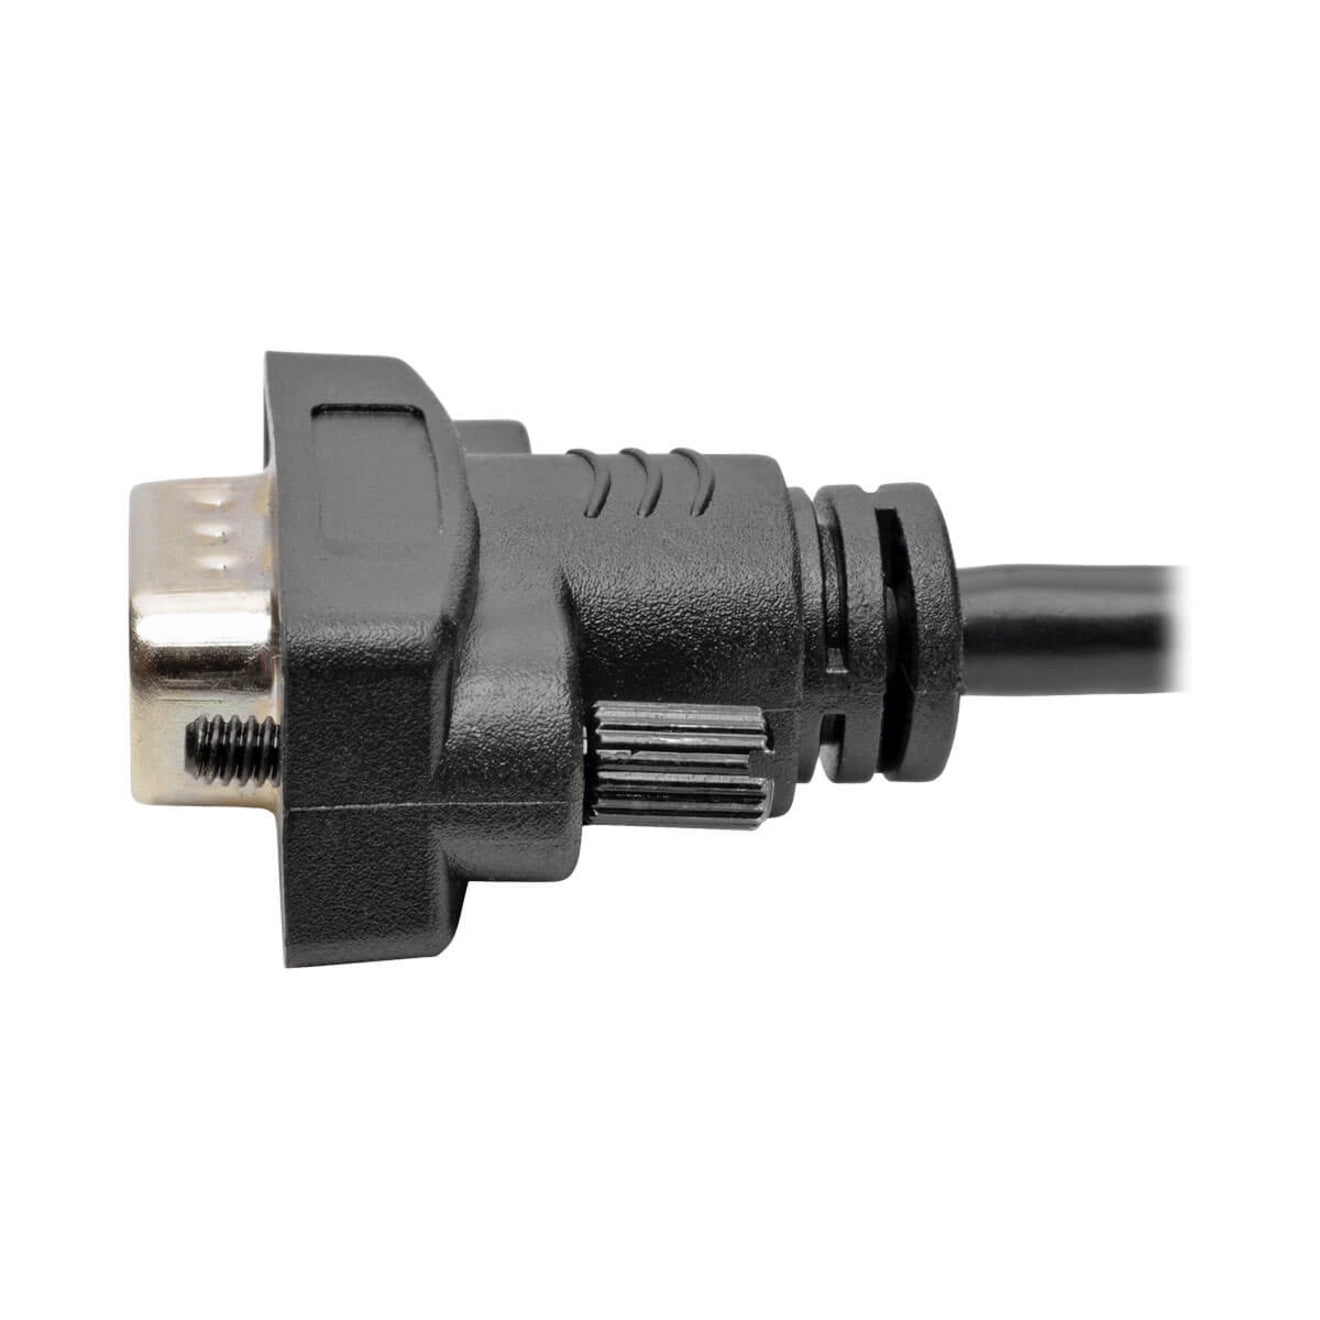 Tripp Lite P566-006-VGA HDMI to VGA Active Converter Cable, 6 ft. - Corrosion Resistant, Strain Relief, Crosstalk Protection